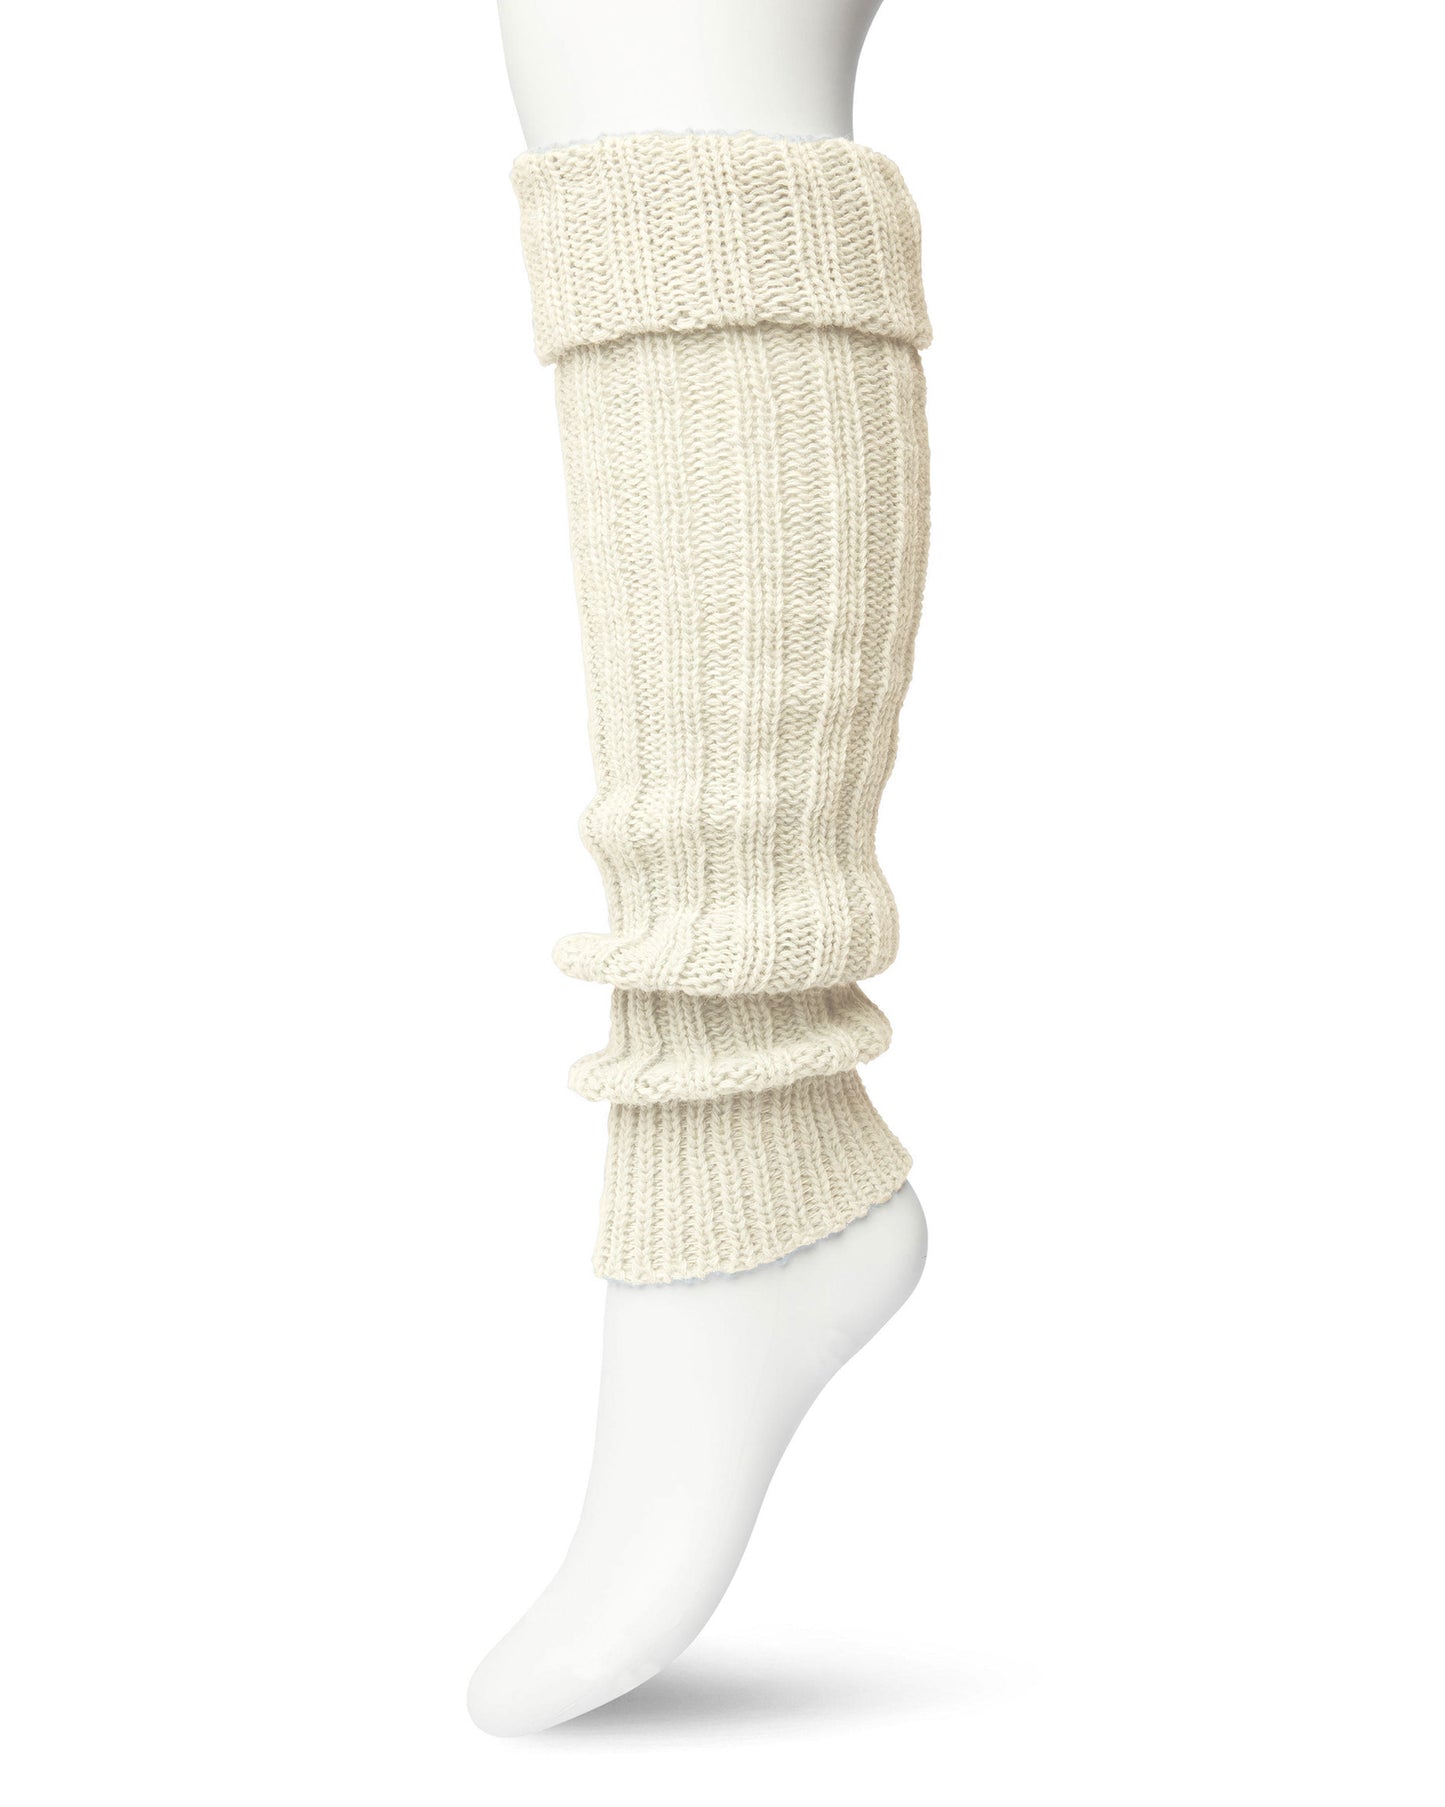 Bonnie Doon Sleever/Legwarmer BE021766 - ivory cream wool mix chunky knitted leg warmers